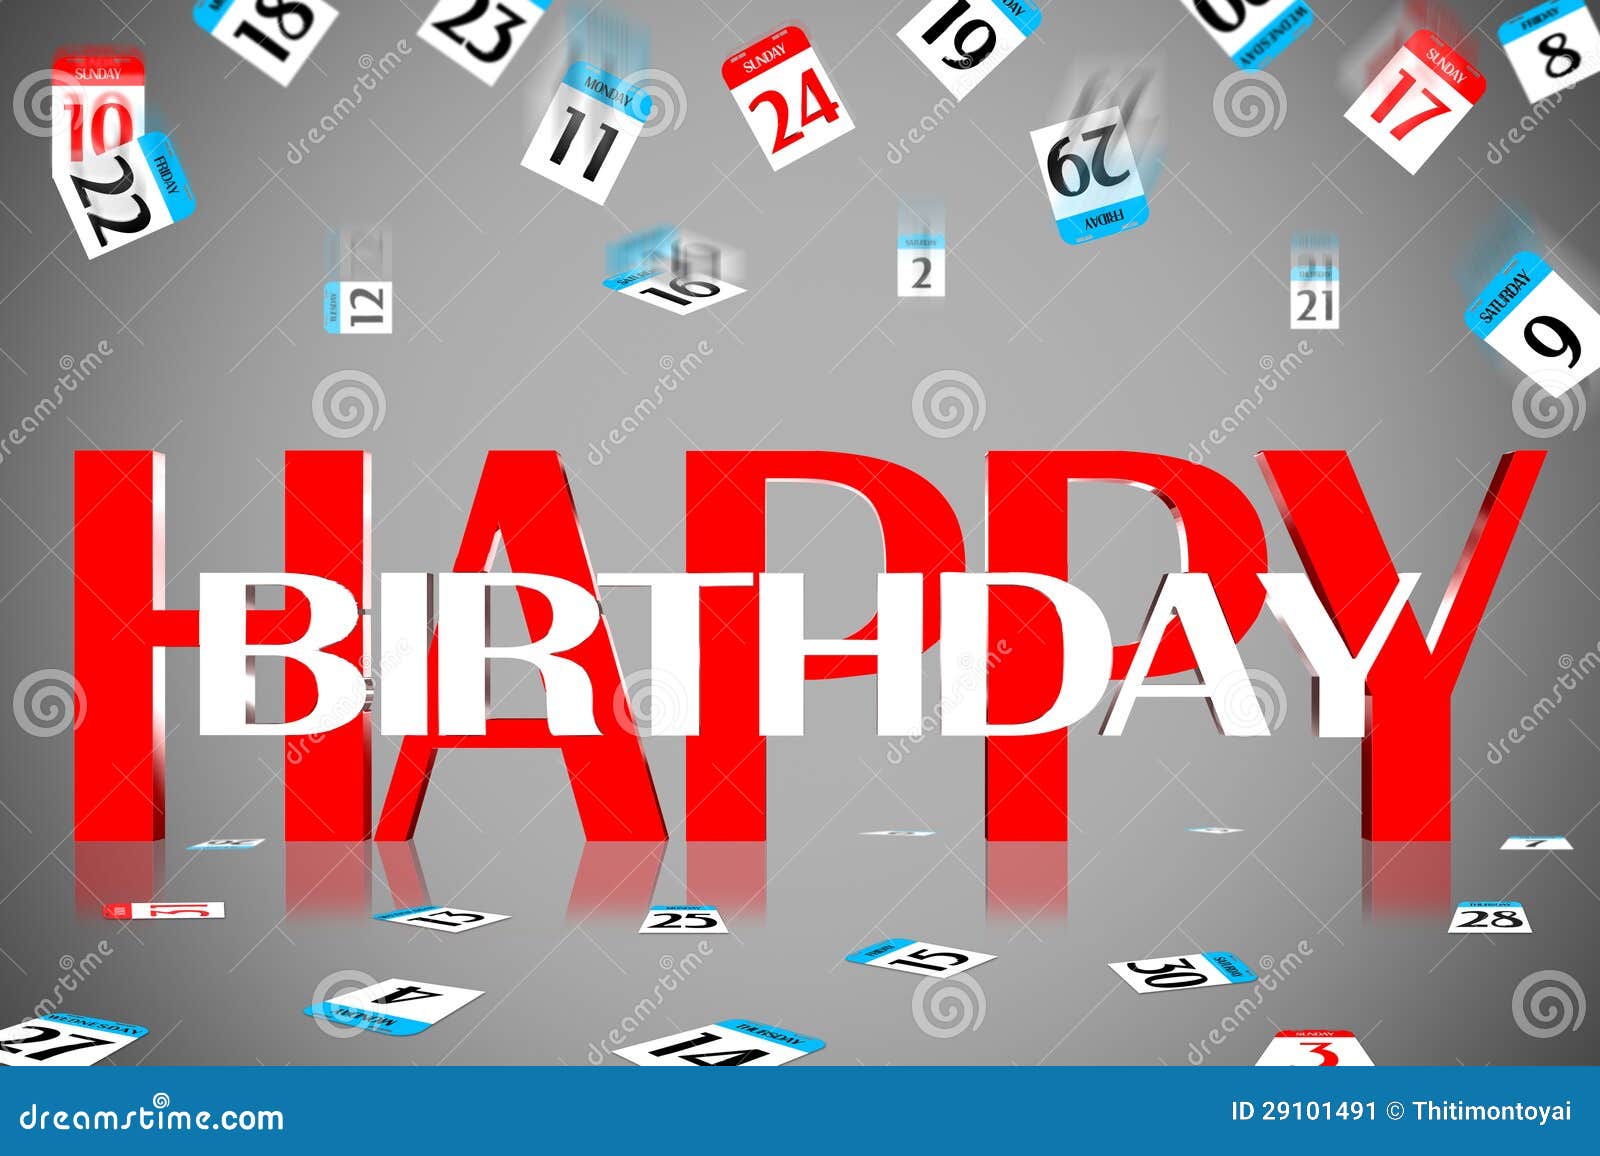 3D Happy Birthday stock illustration. Illustration of birthday - 29101491